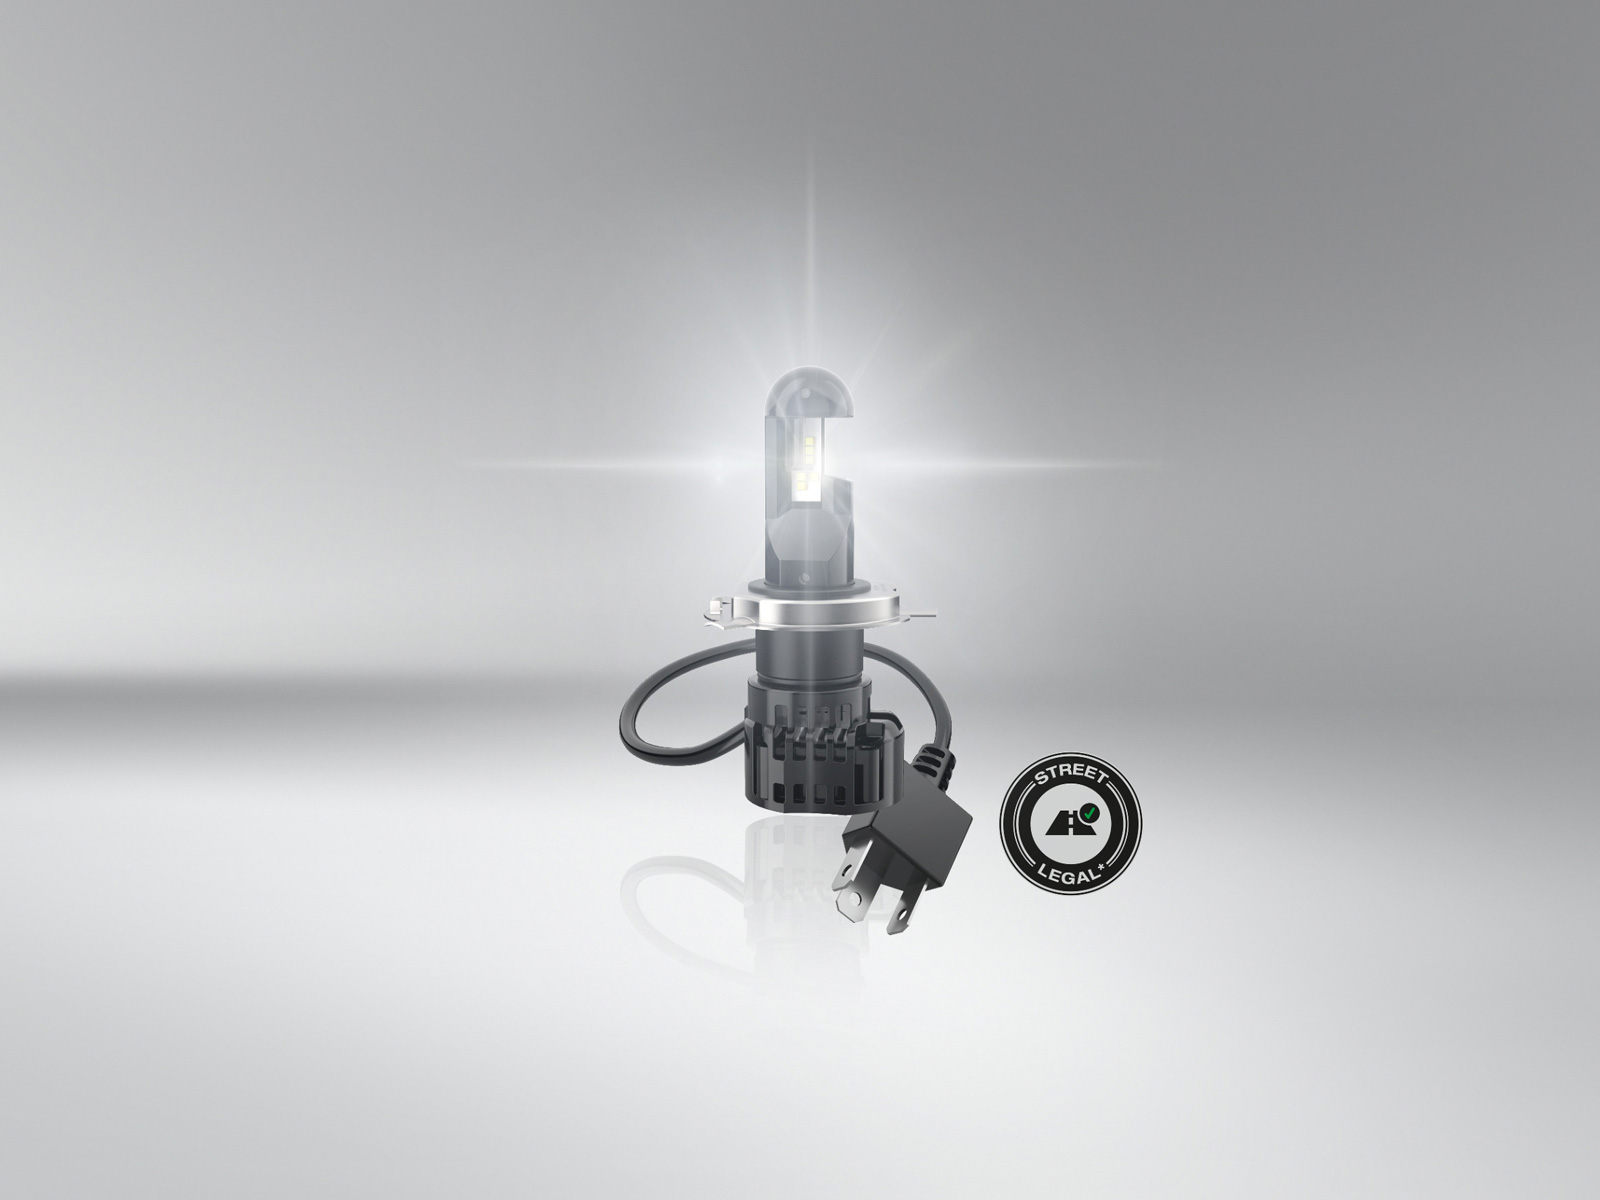 OSRAM H4 LED Night Breaker für VW Caddy Typ 2K 2010-2015 mit